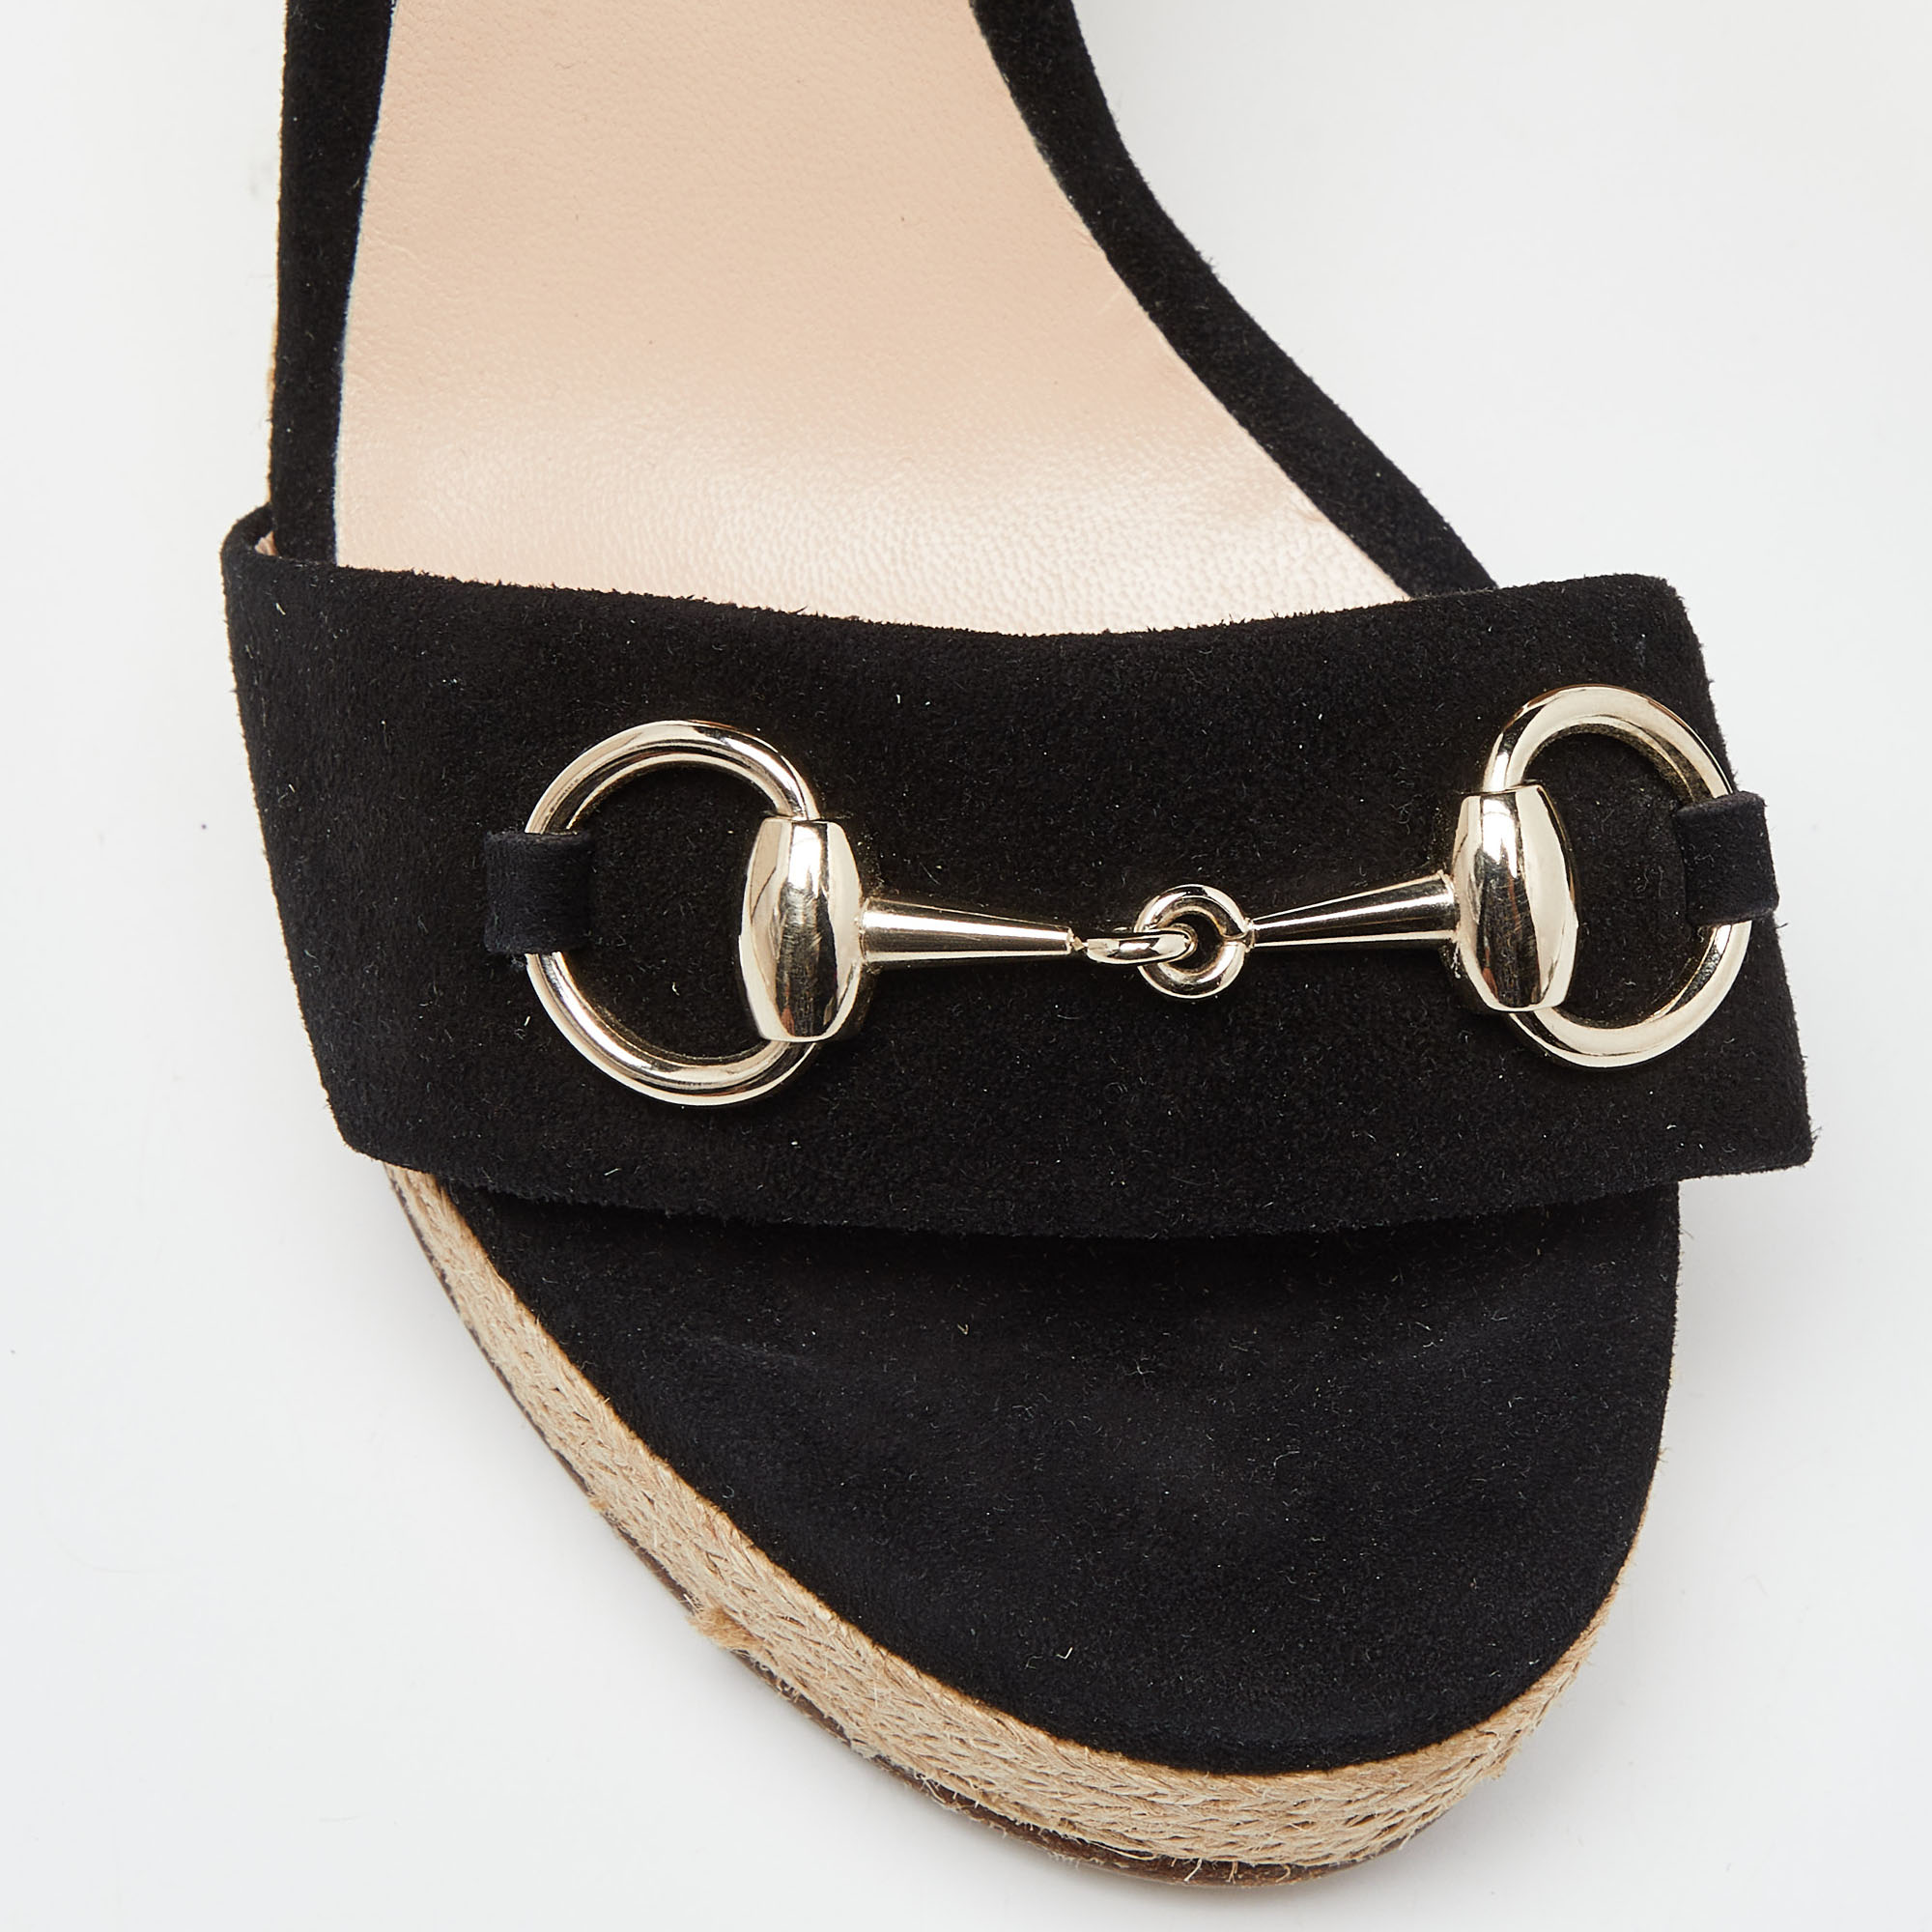 Gucci Black Suede Horsebit Wedge Espadrille Platform Sandals Size 38.5